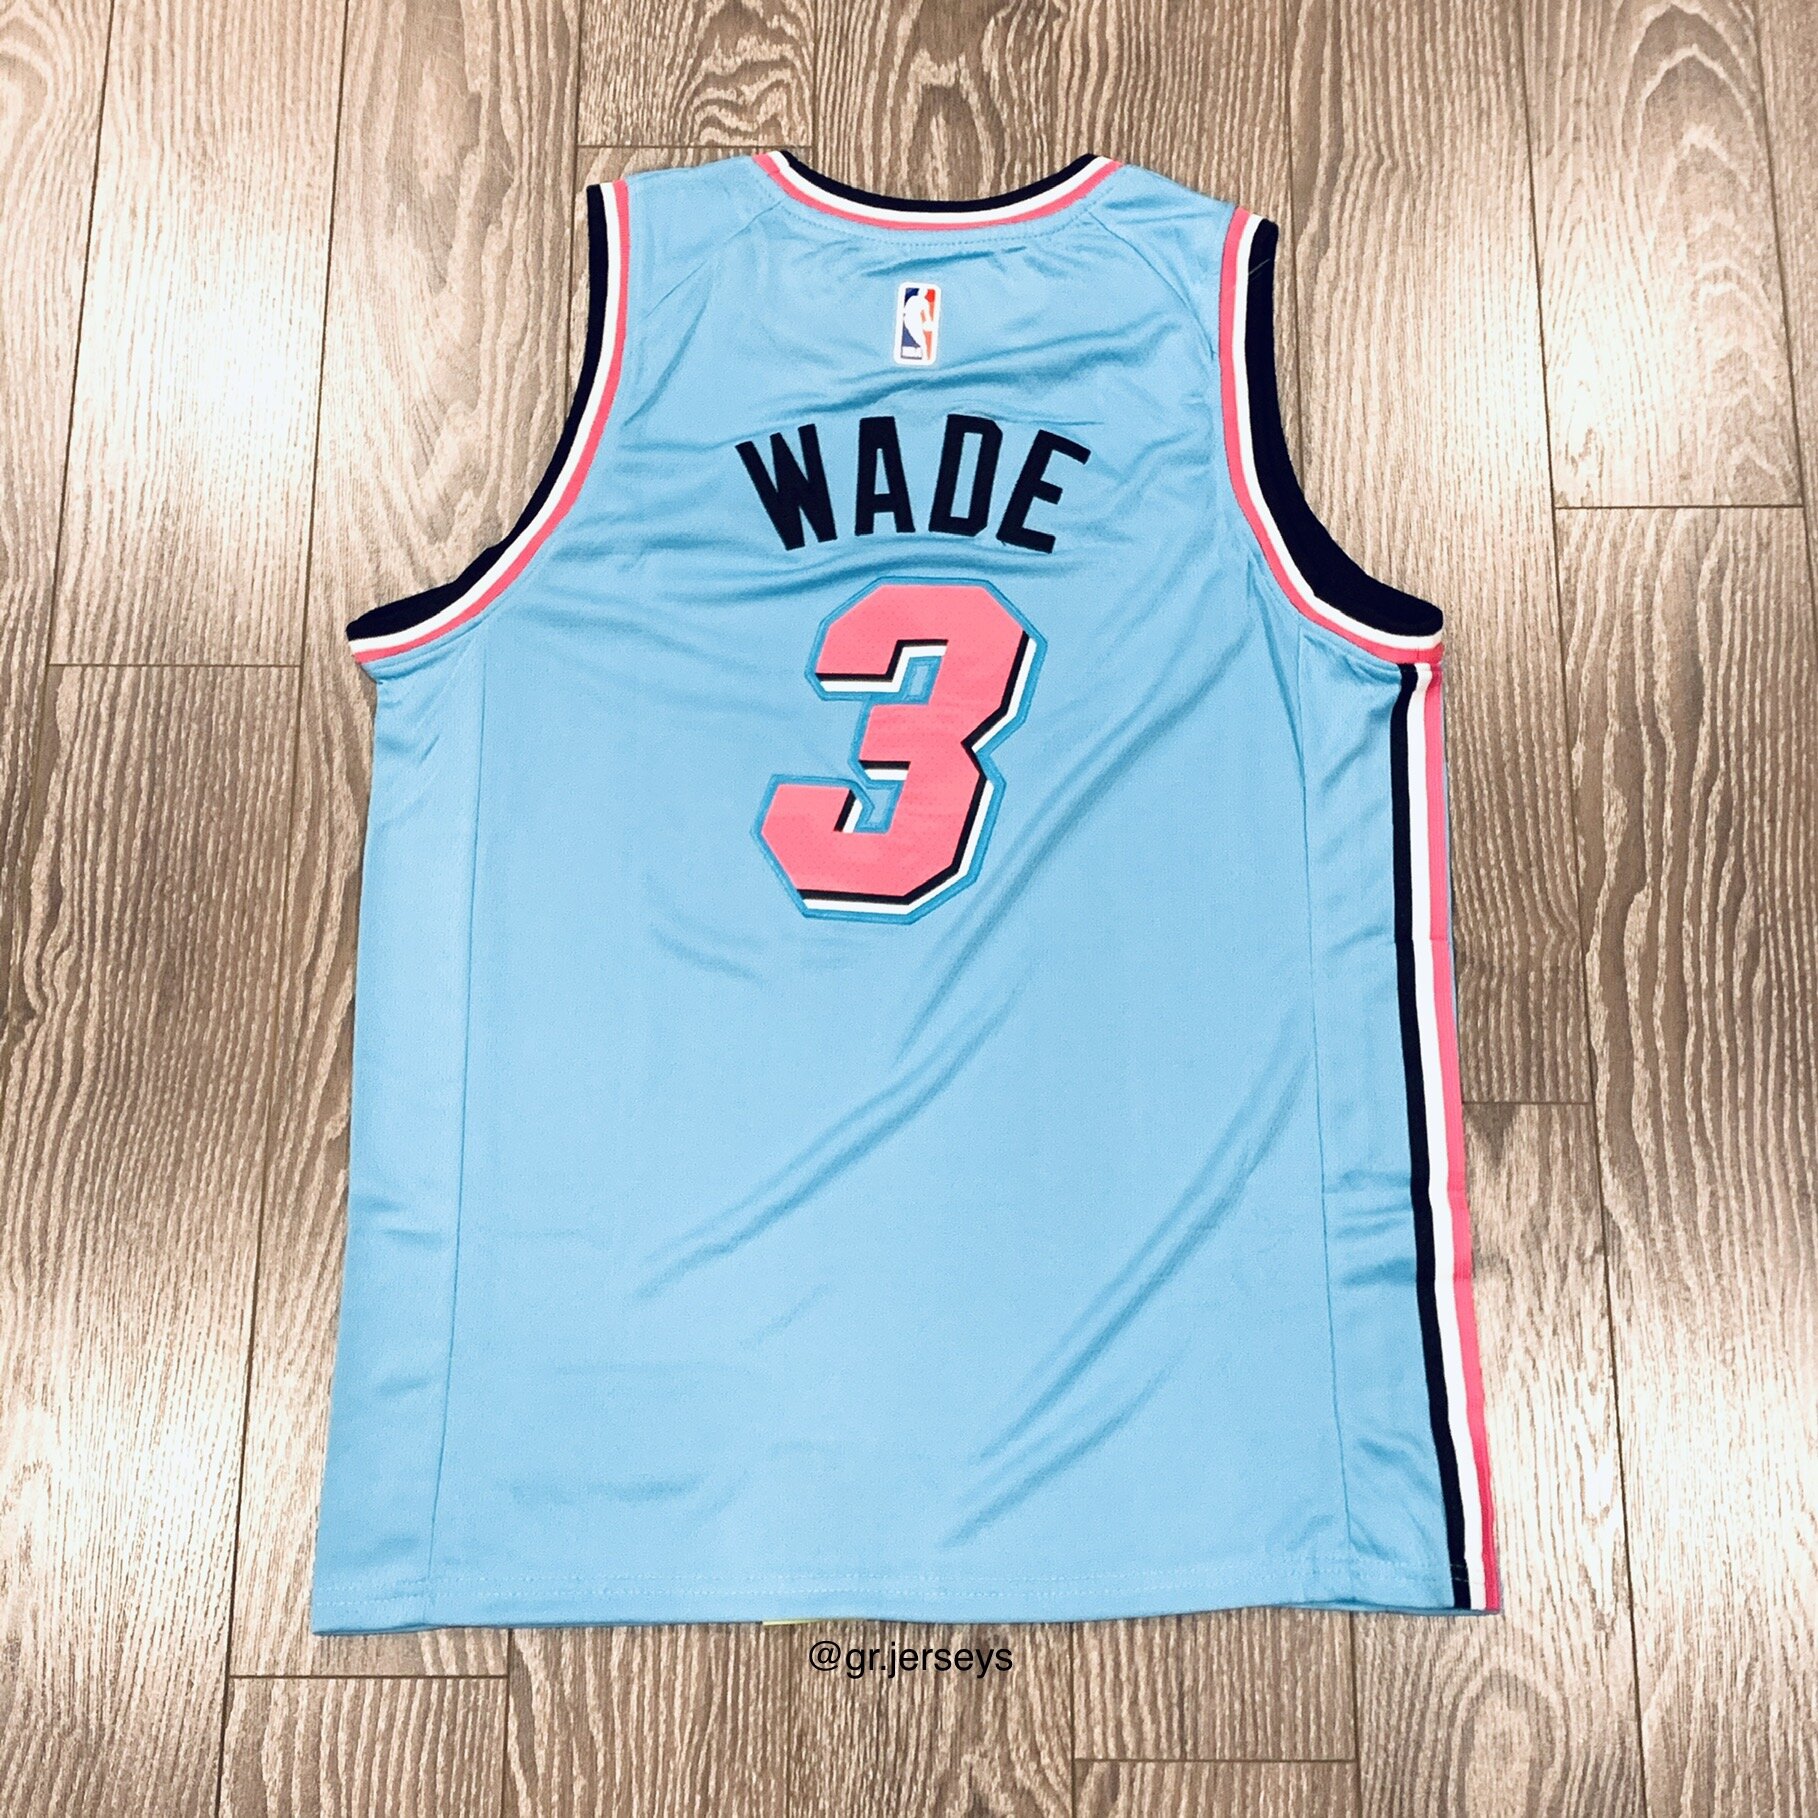 Dwayne Wade #3 Miami Heat Miami Vice Edition Small Jersey